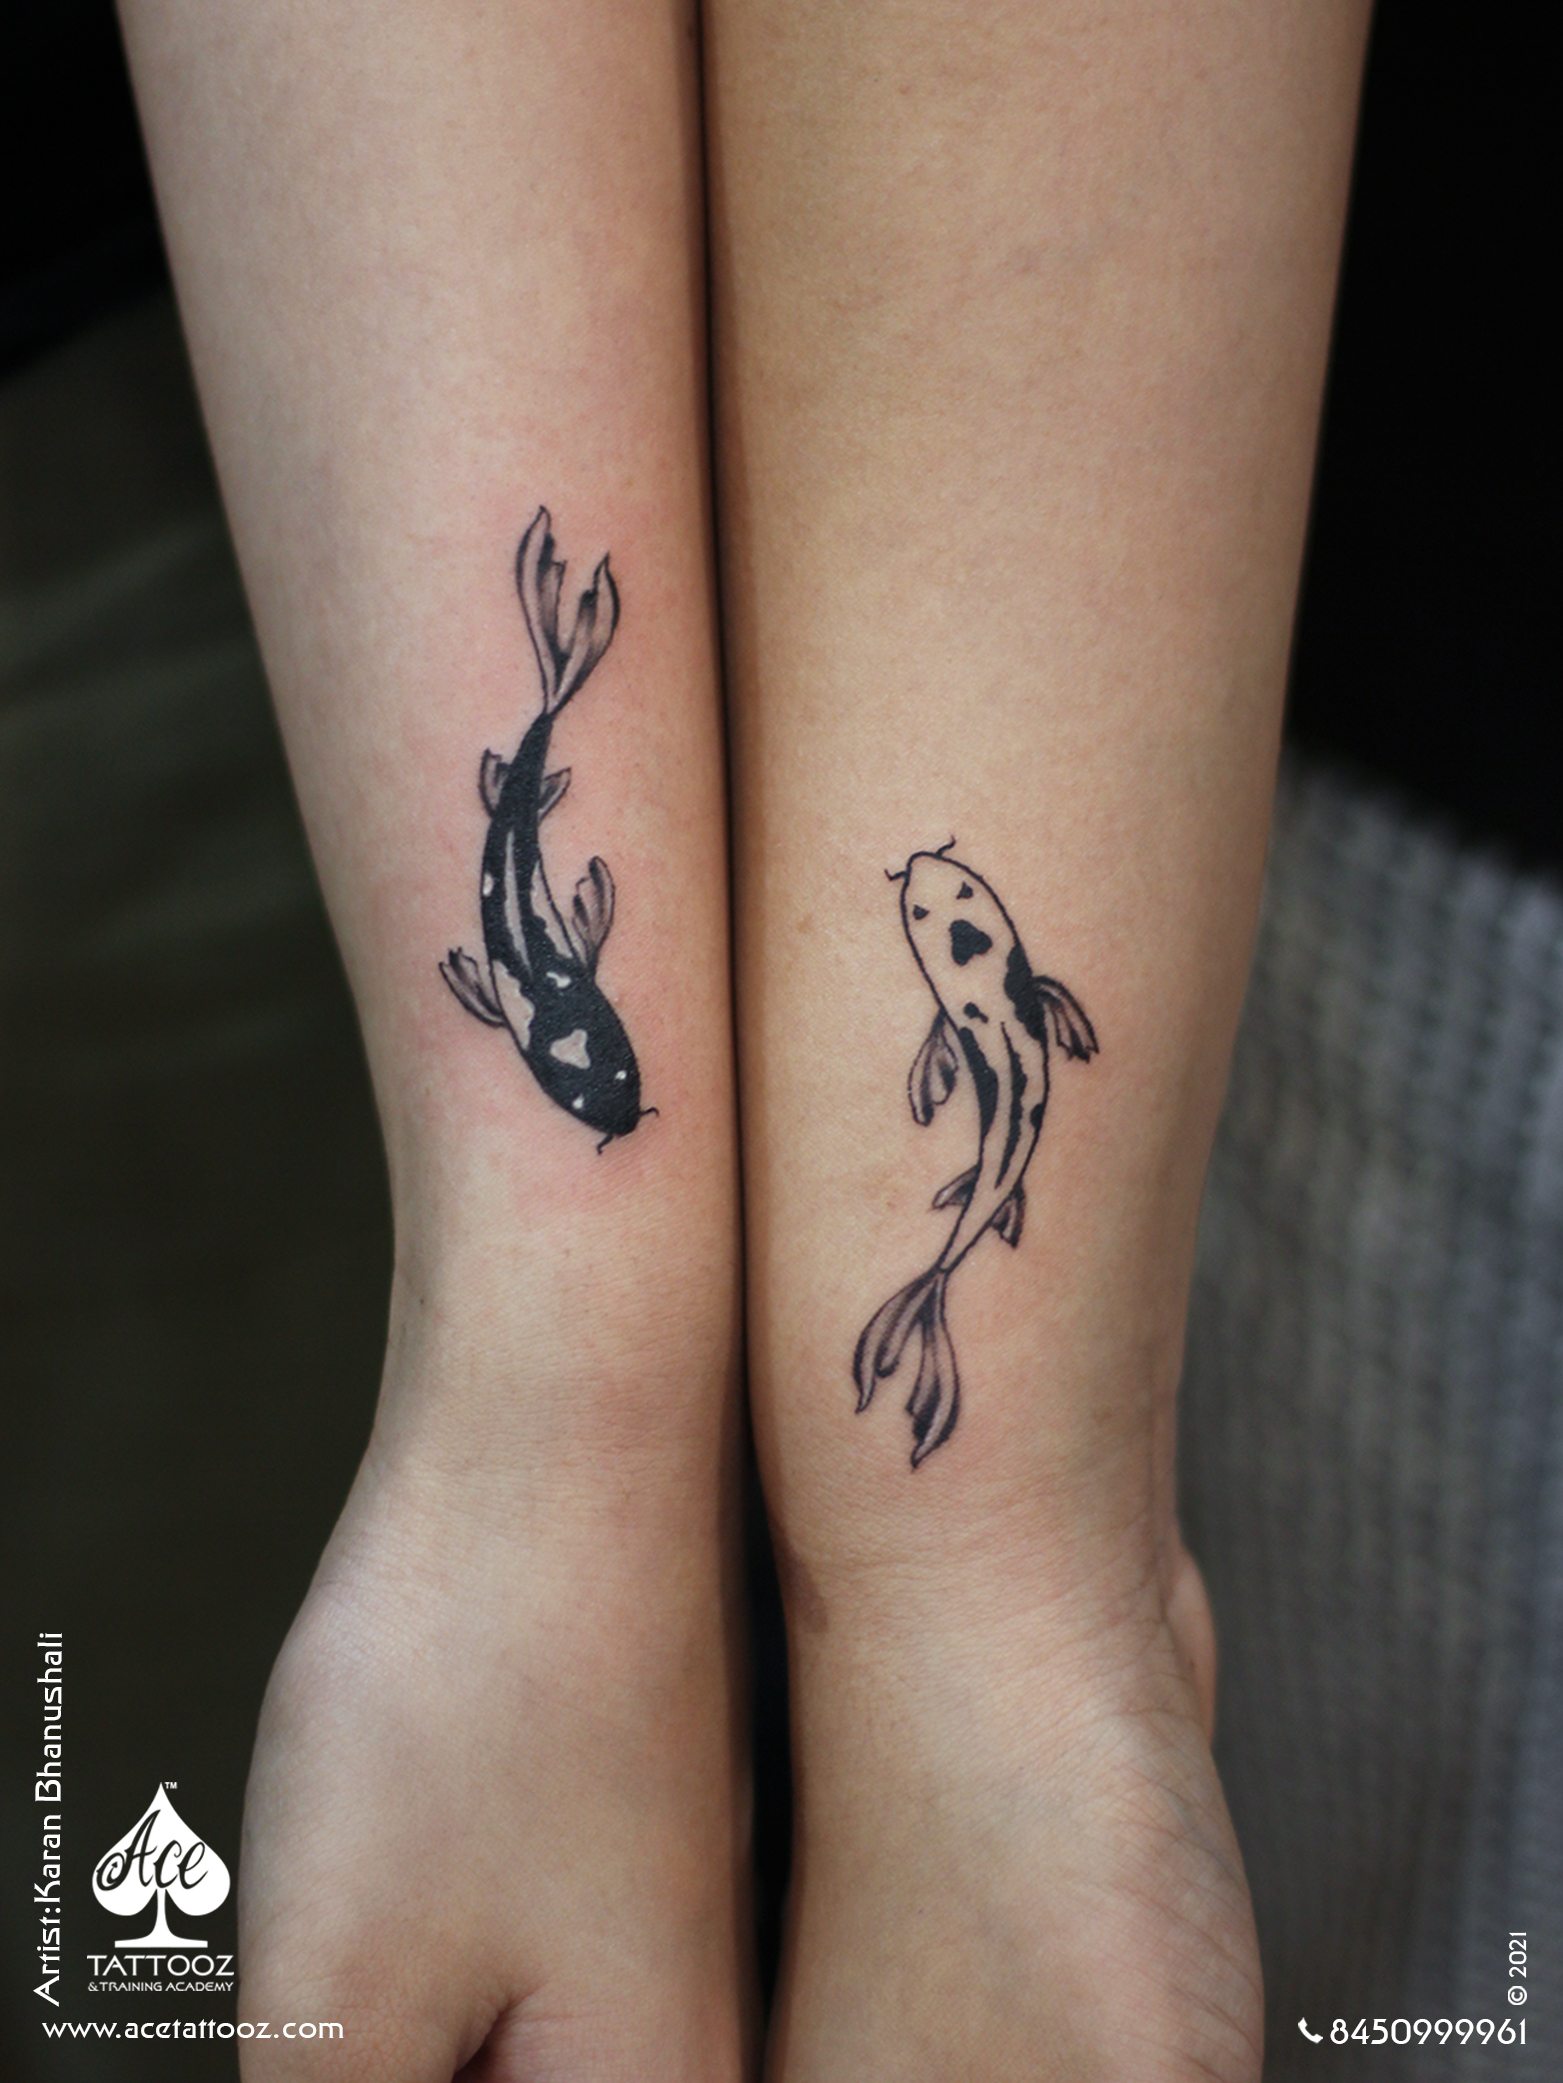 Fish Tattoo Design Ideas For Girls | Stylish Fish Tattoos For Girls |  Women's Tattoo Designs! - YouTube